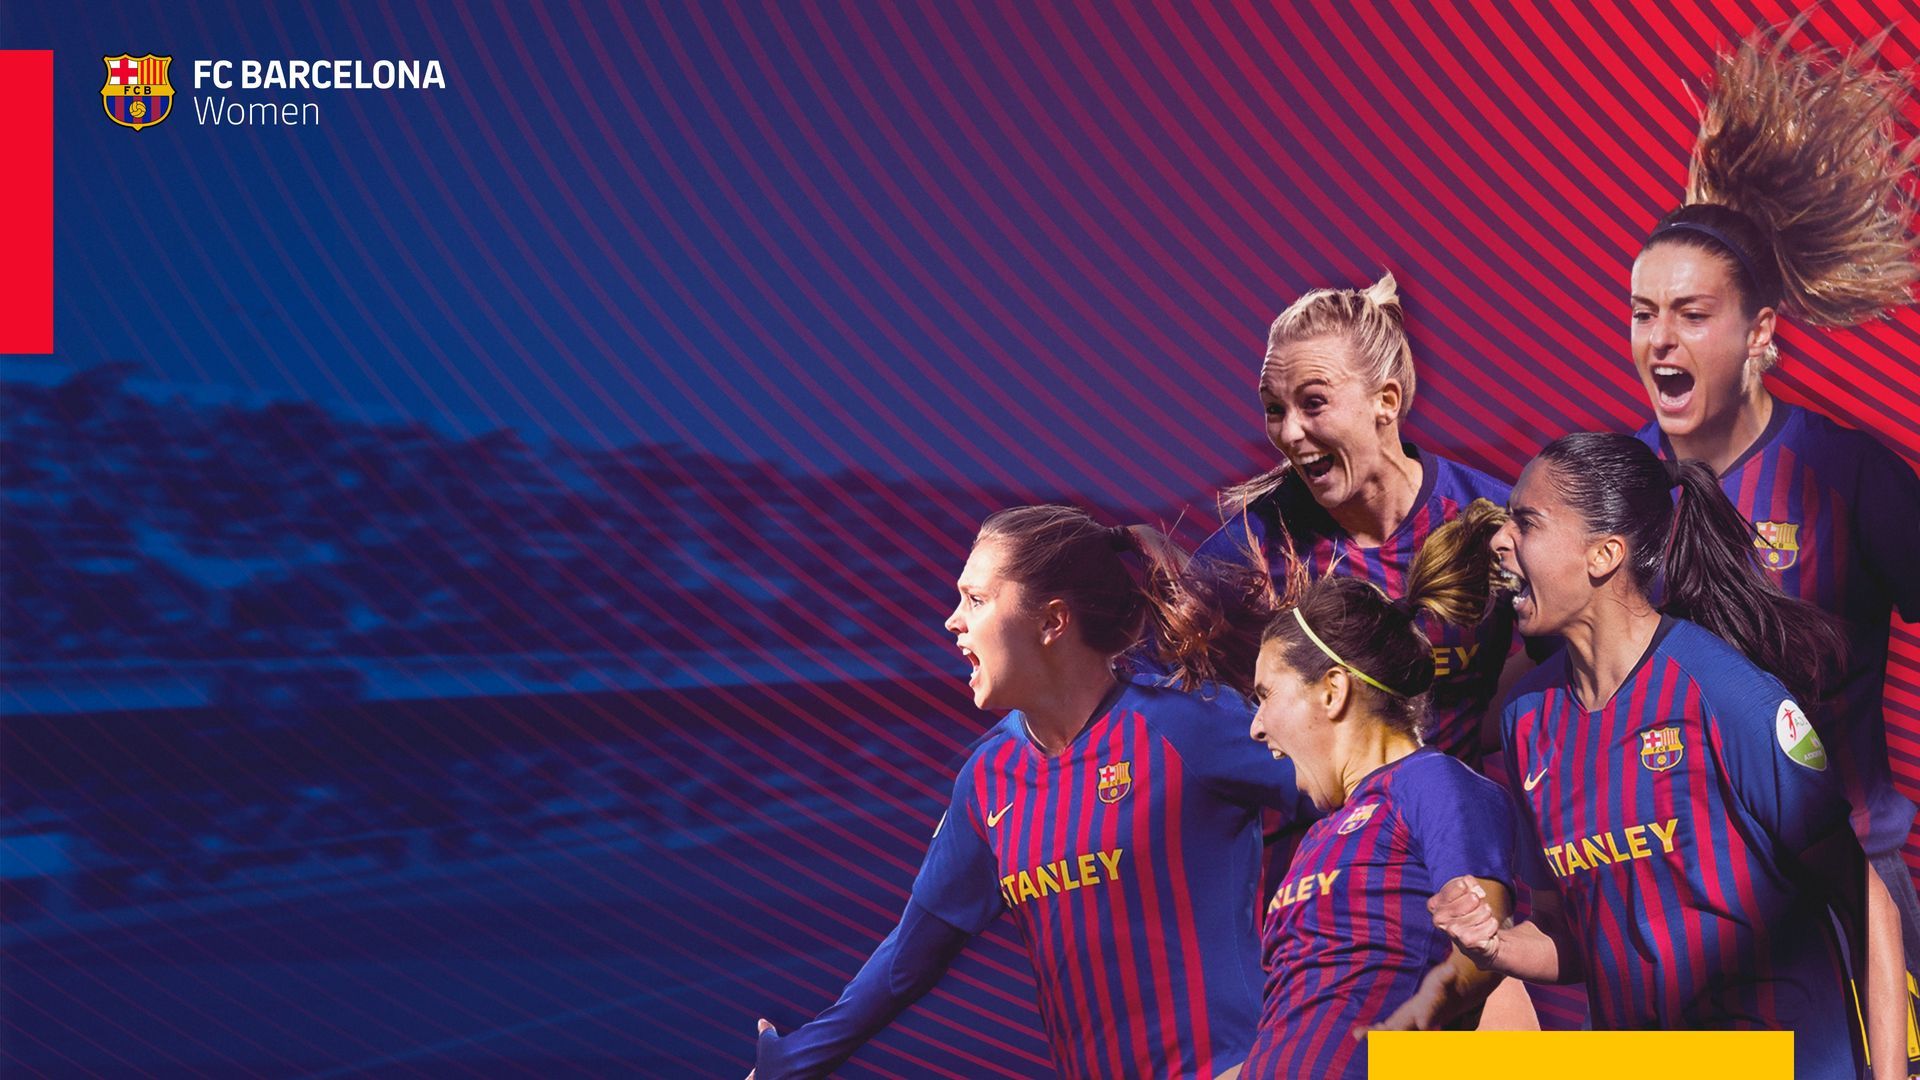 Free download Bara Fans Wallpaper Official FC Barcelona Website